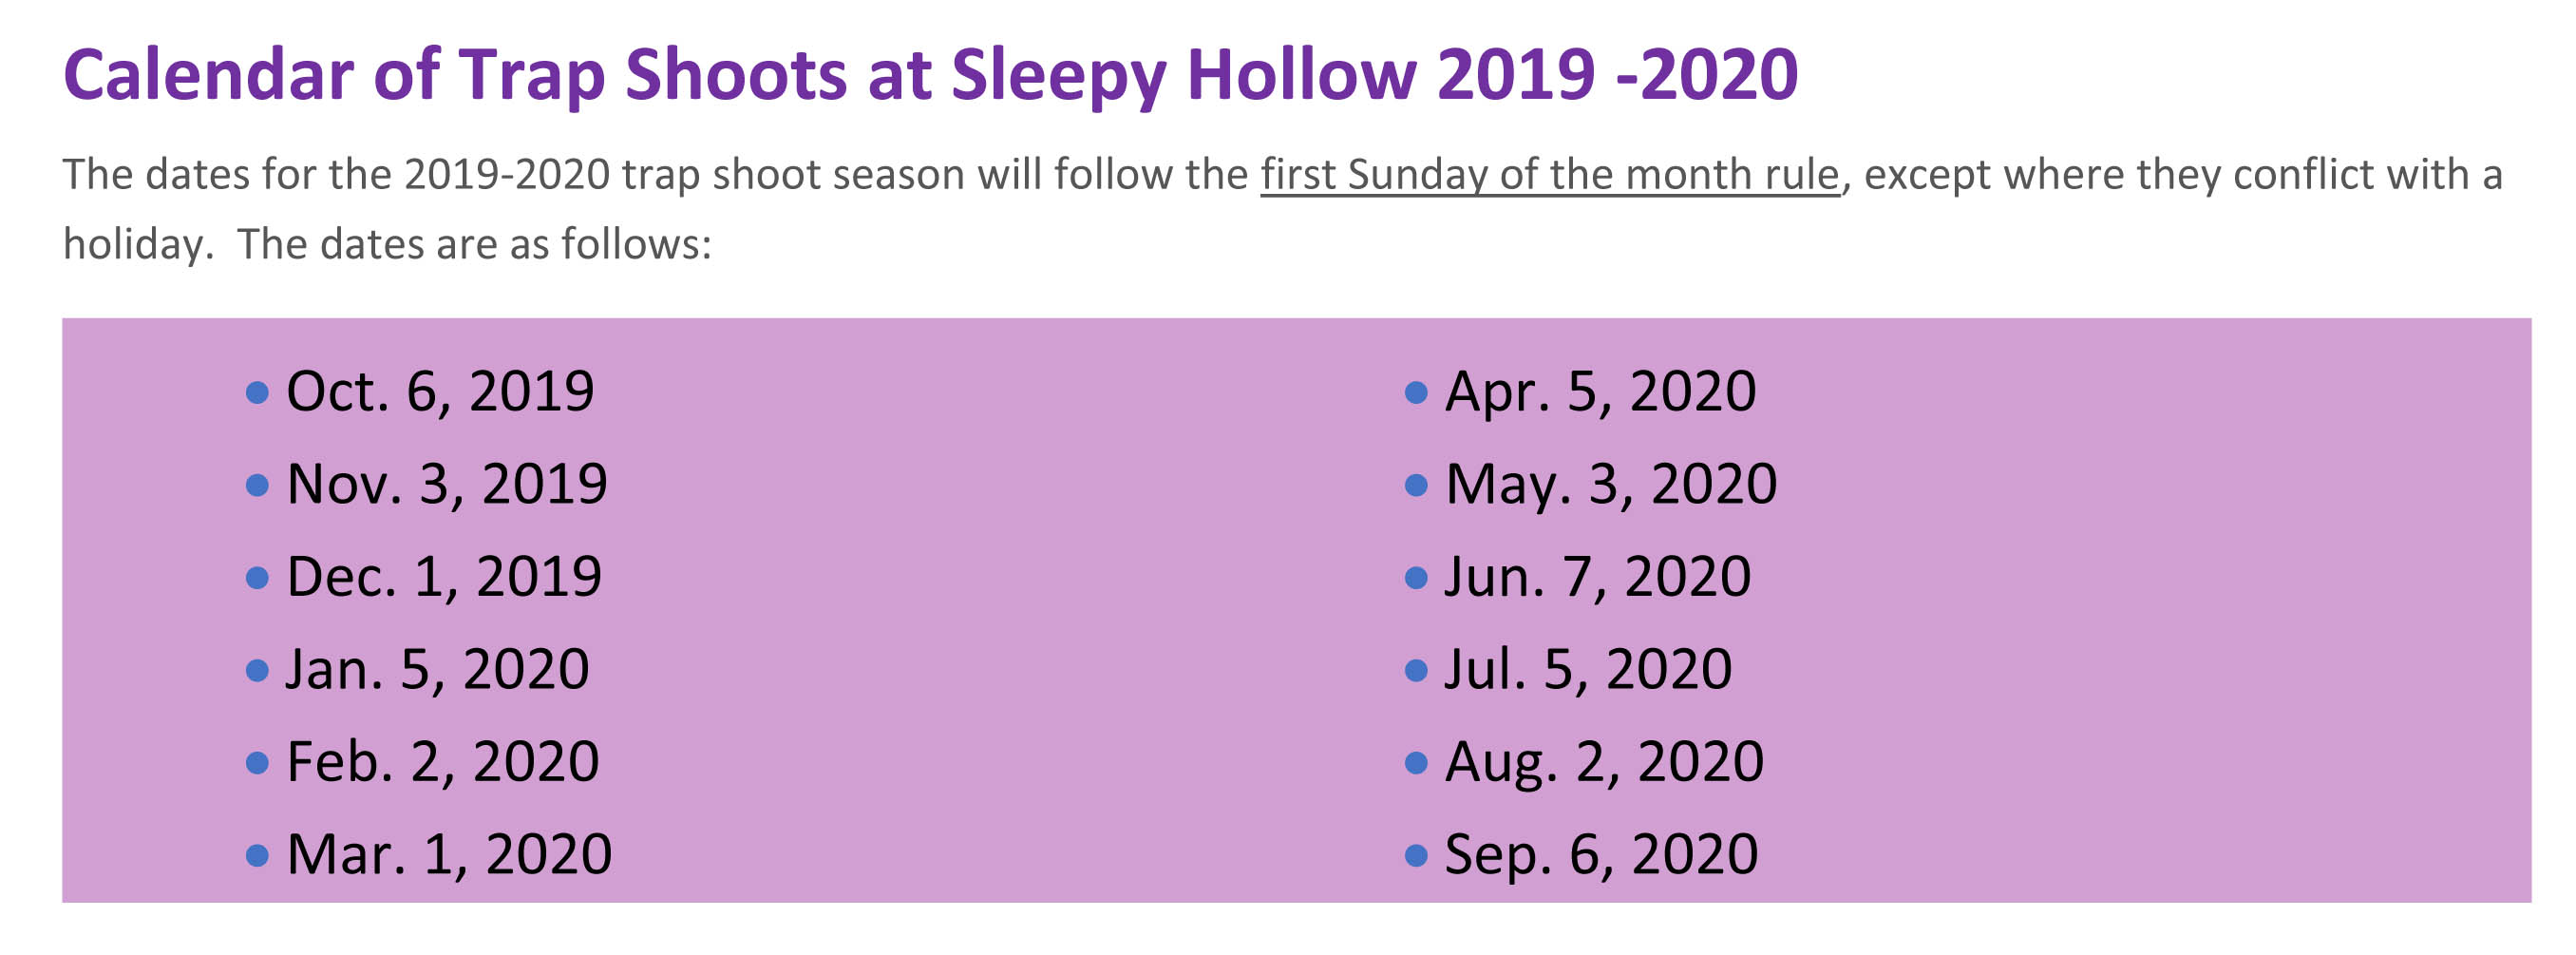 Trap Shoot Calendar for 2020 Sleepy Hollow AC